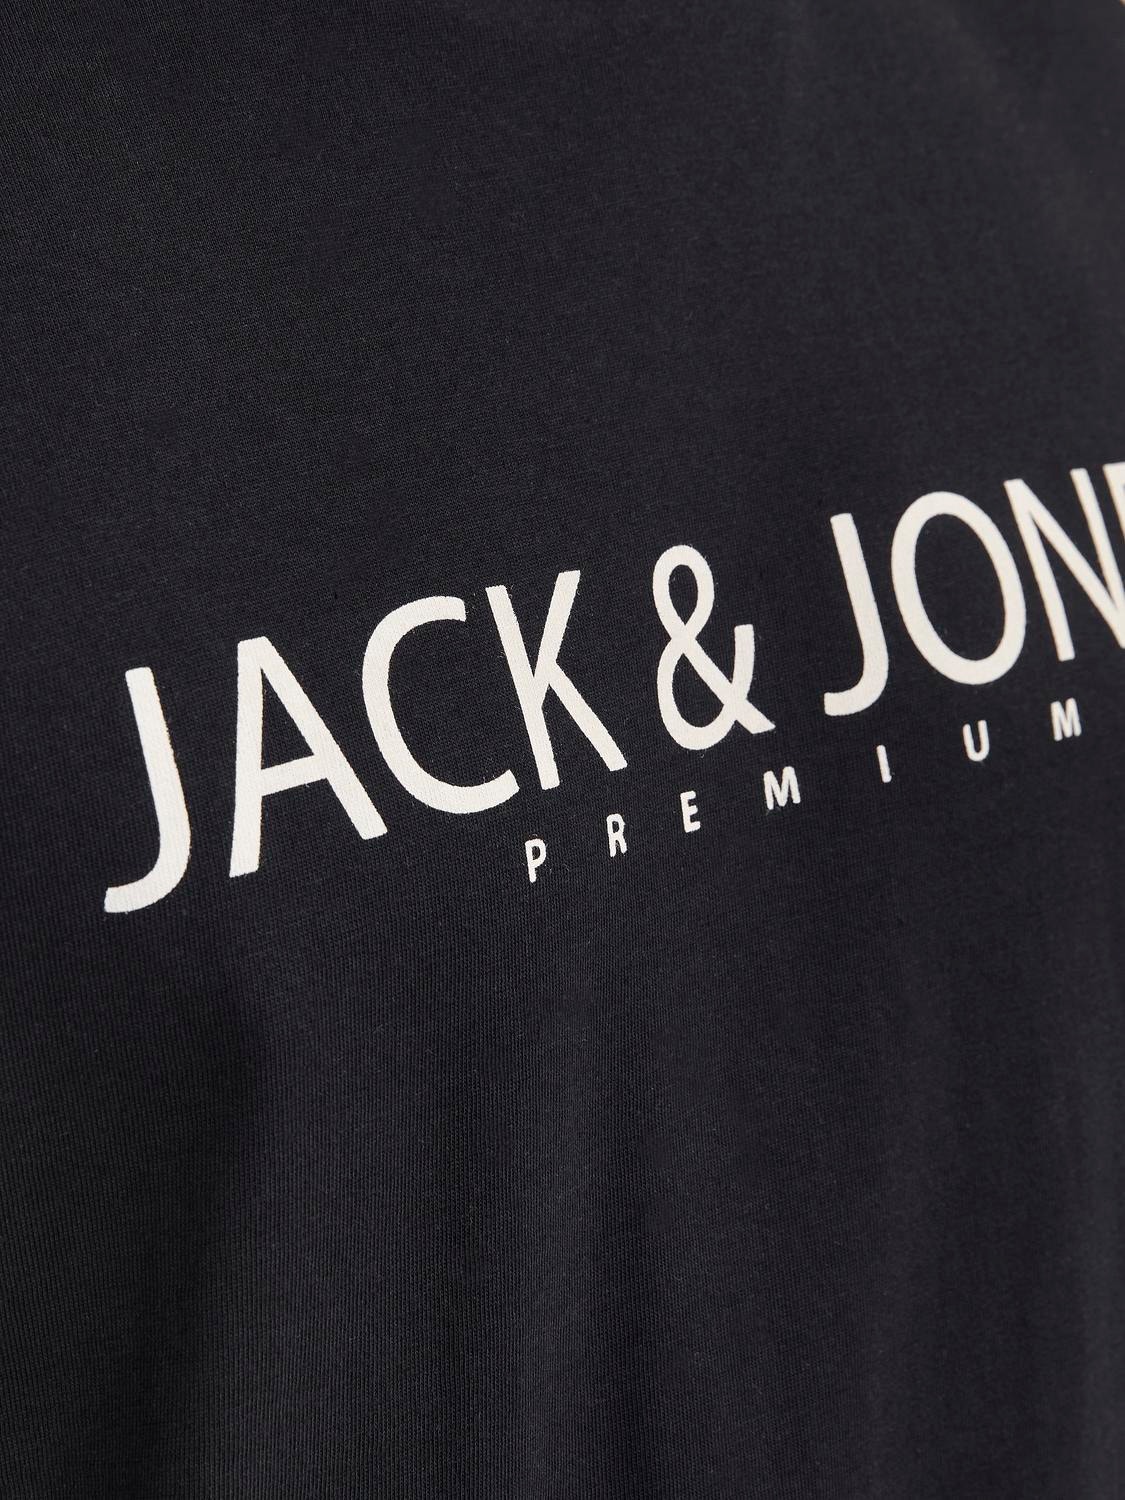 Jack & Jones Camiseta Logotipo Cuello redondo -Black Onyx - 12256971